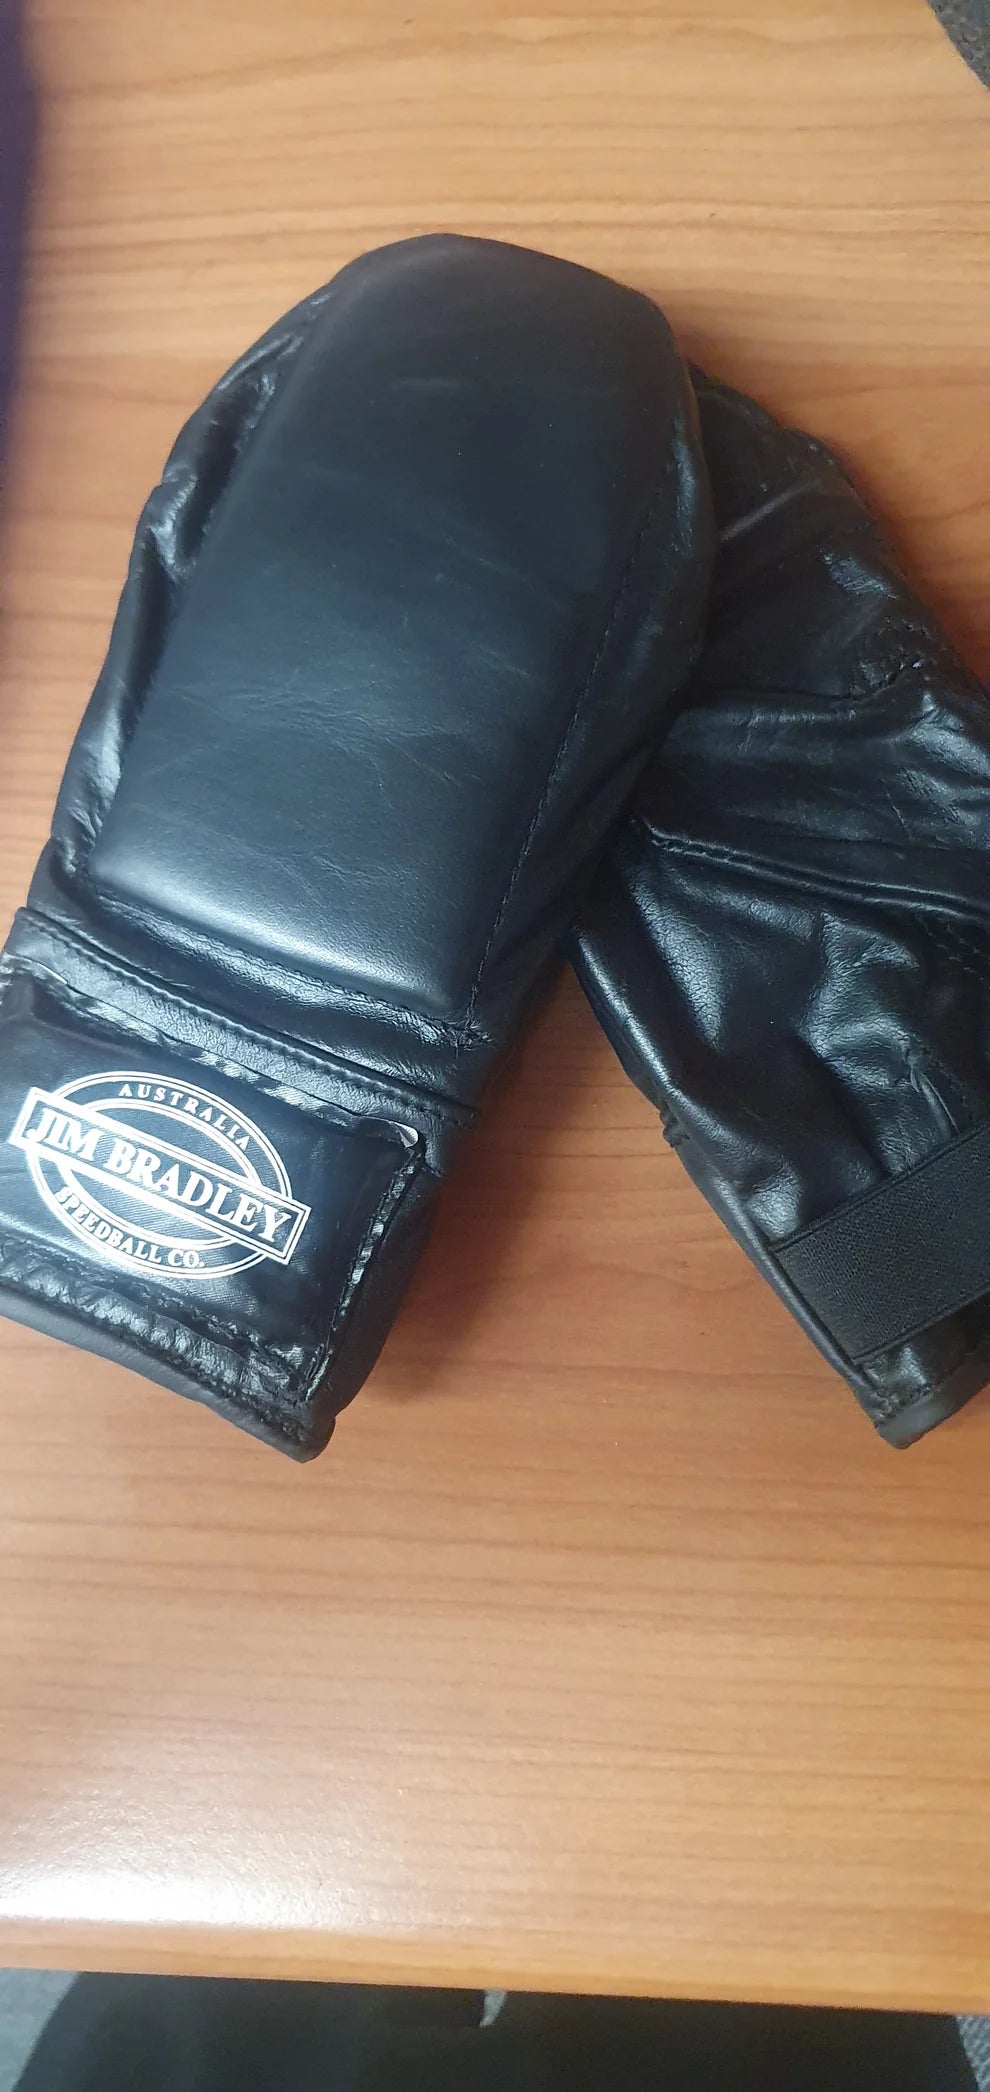 Jim Bradley Old School Bag/Ball Gloves